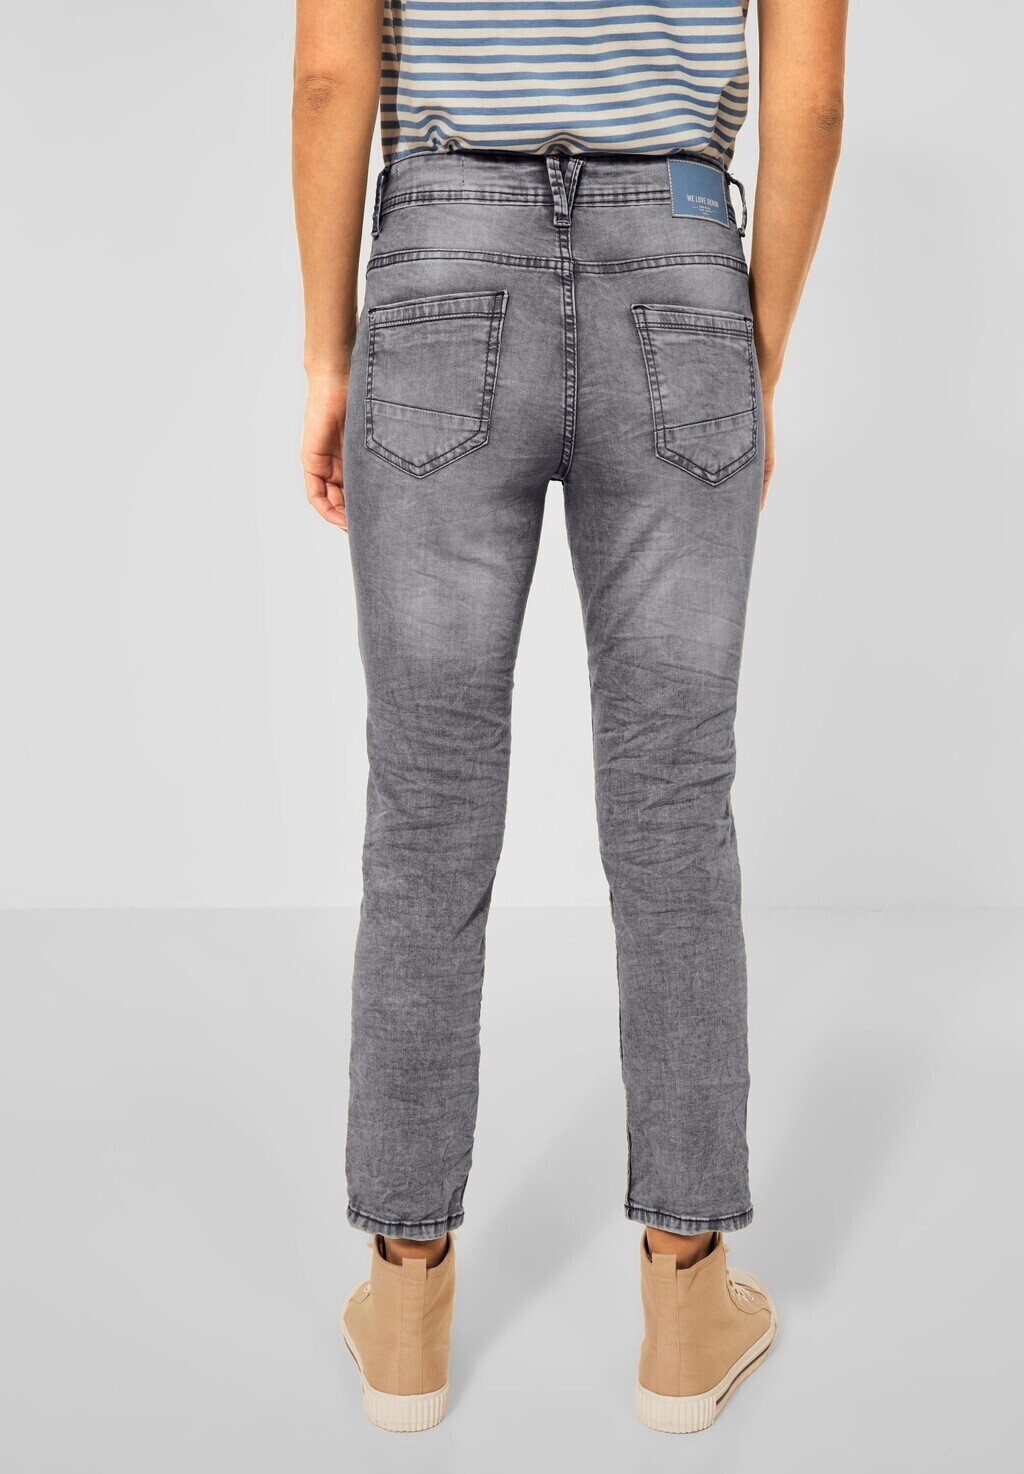 Cecil Scarlett Loose Fit 7/8 Jeans mid grey used wash ab 48,44 € |  Preisvergleich bei